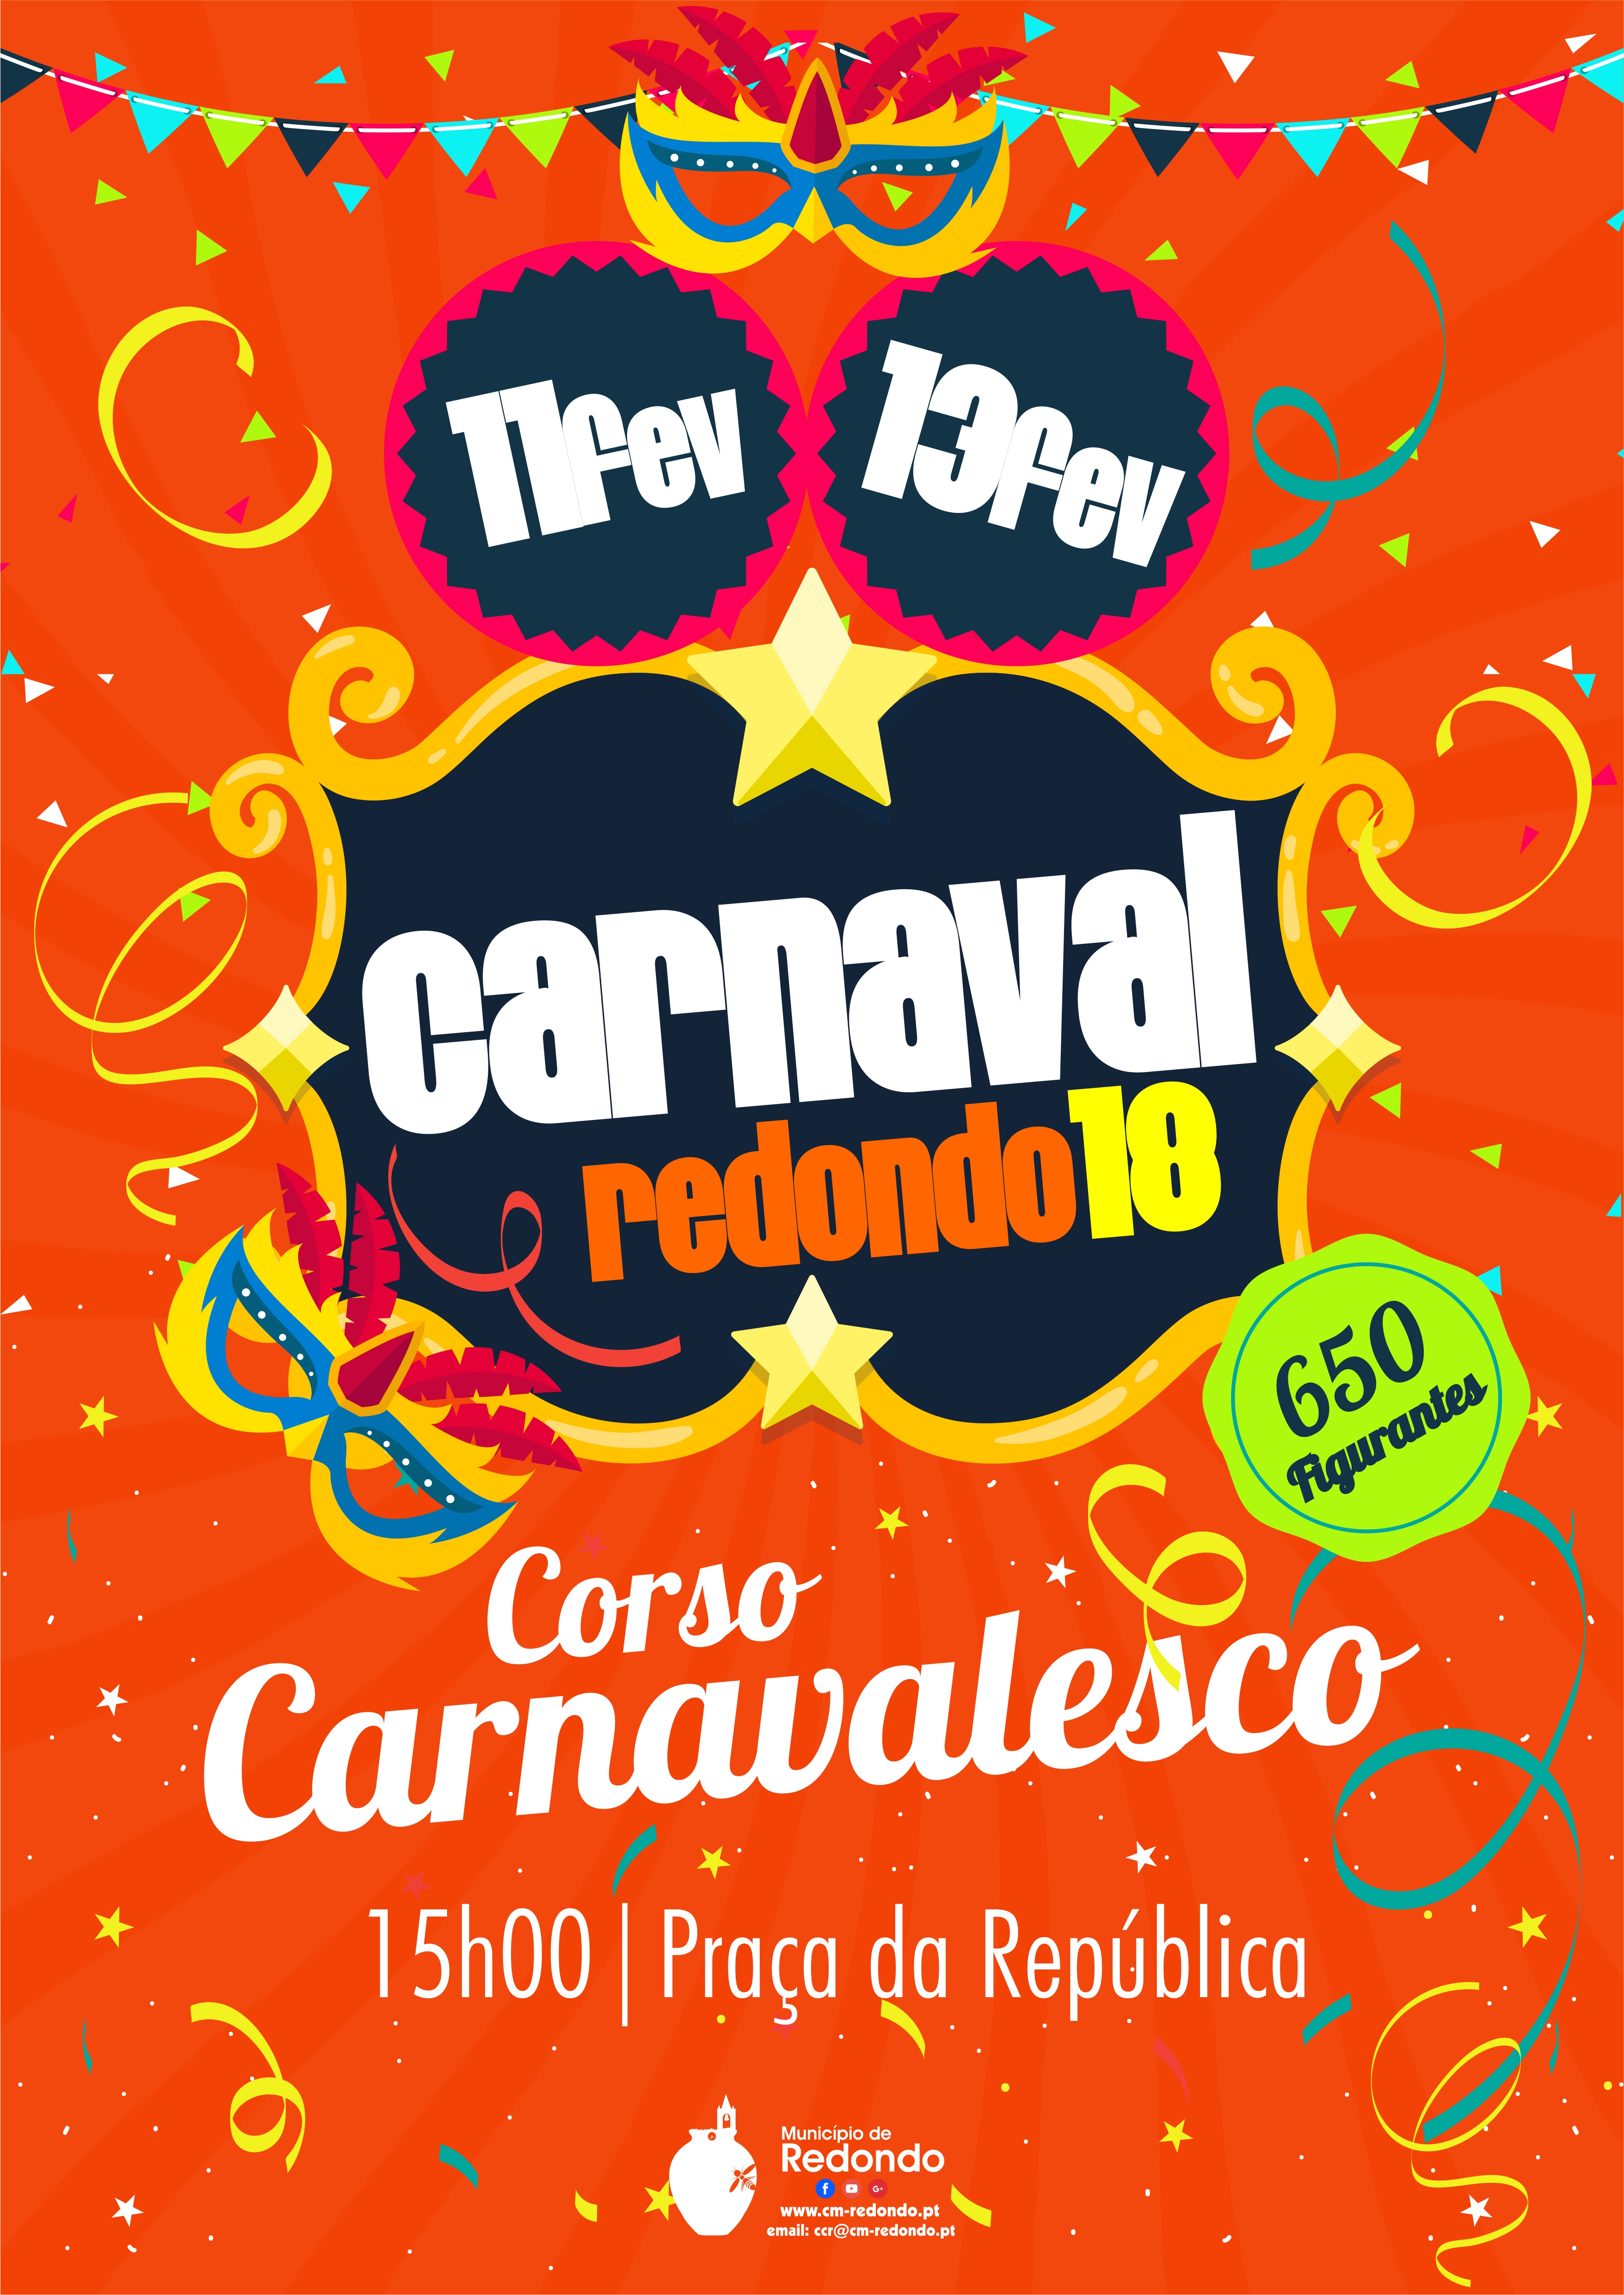 CarnavaldeRedondo2018CorsoCarnavalesco_F_0_1594718844.